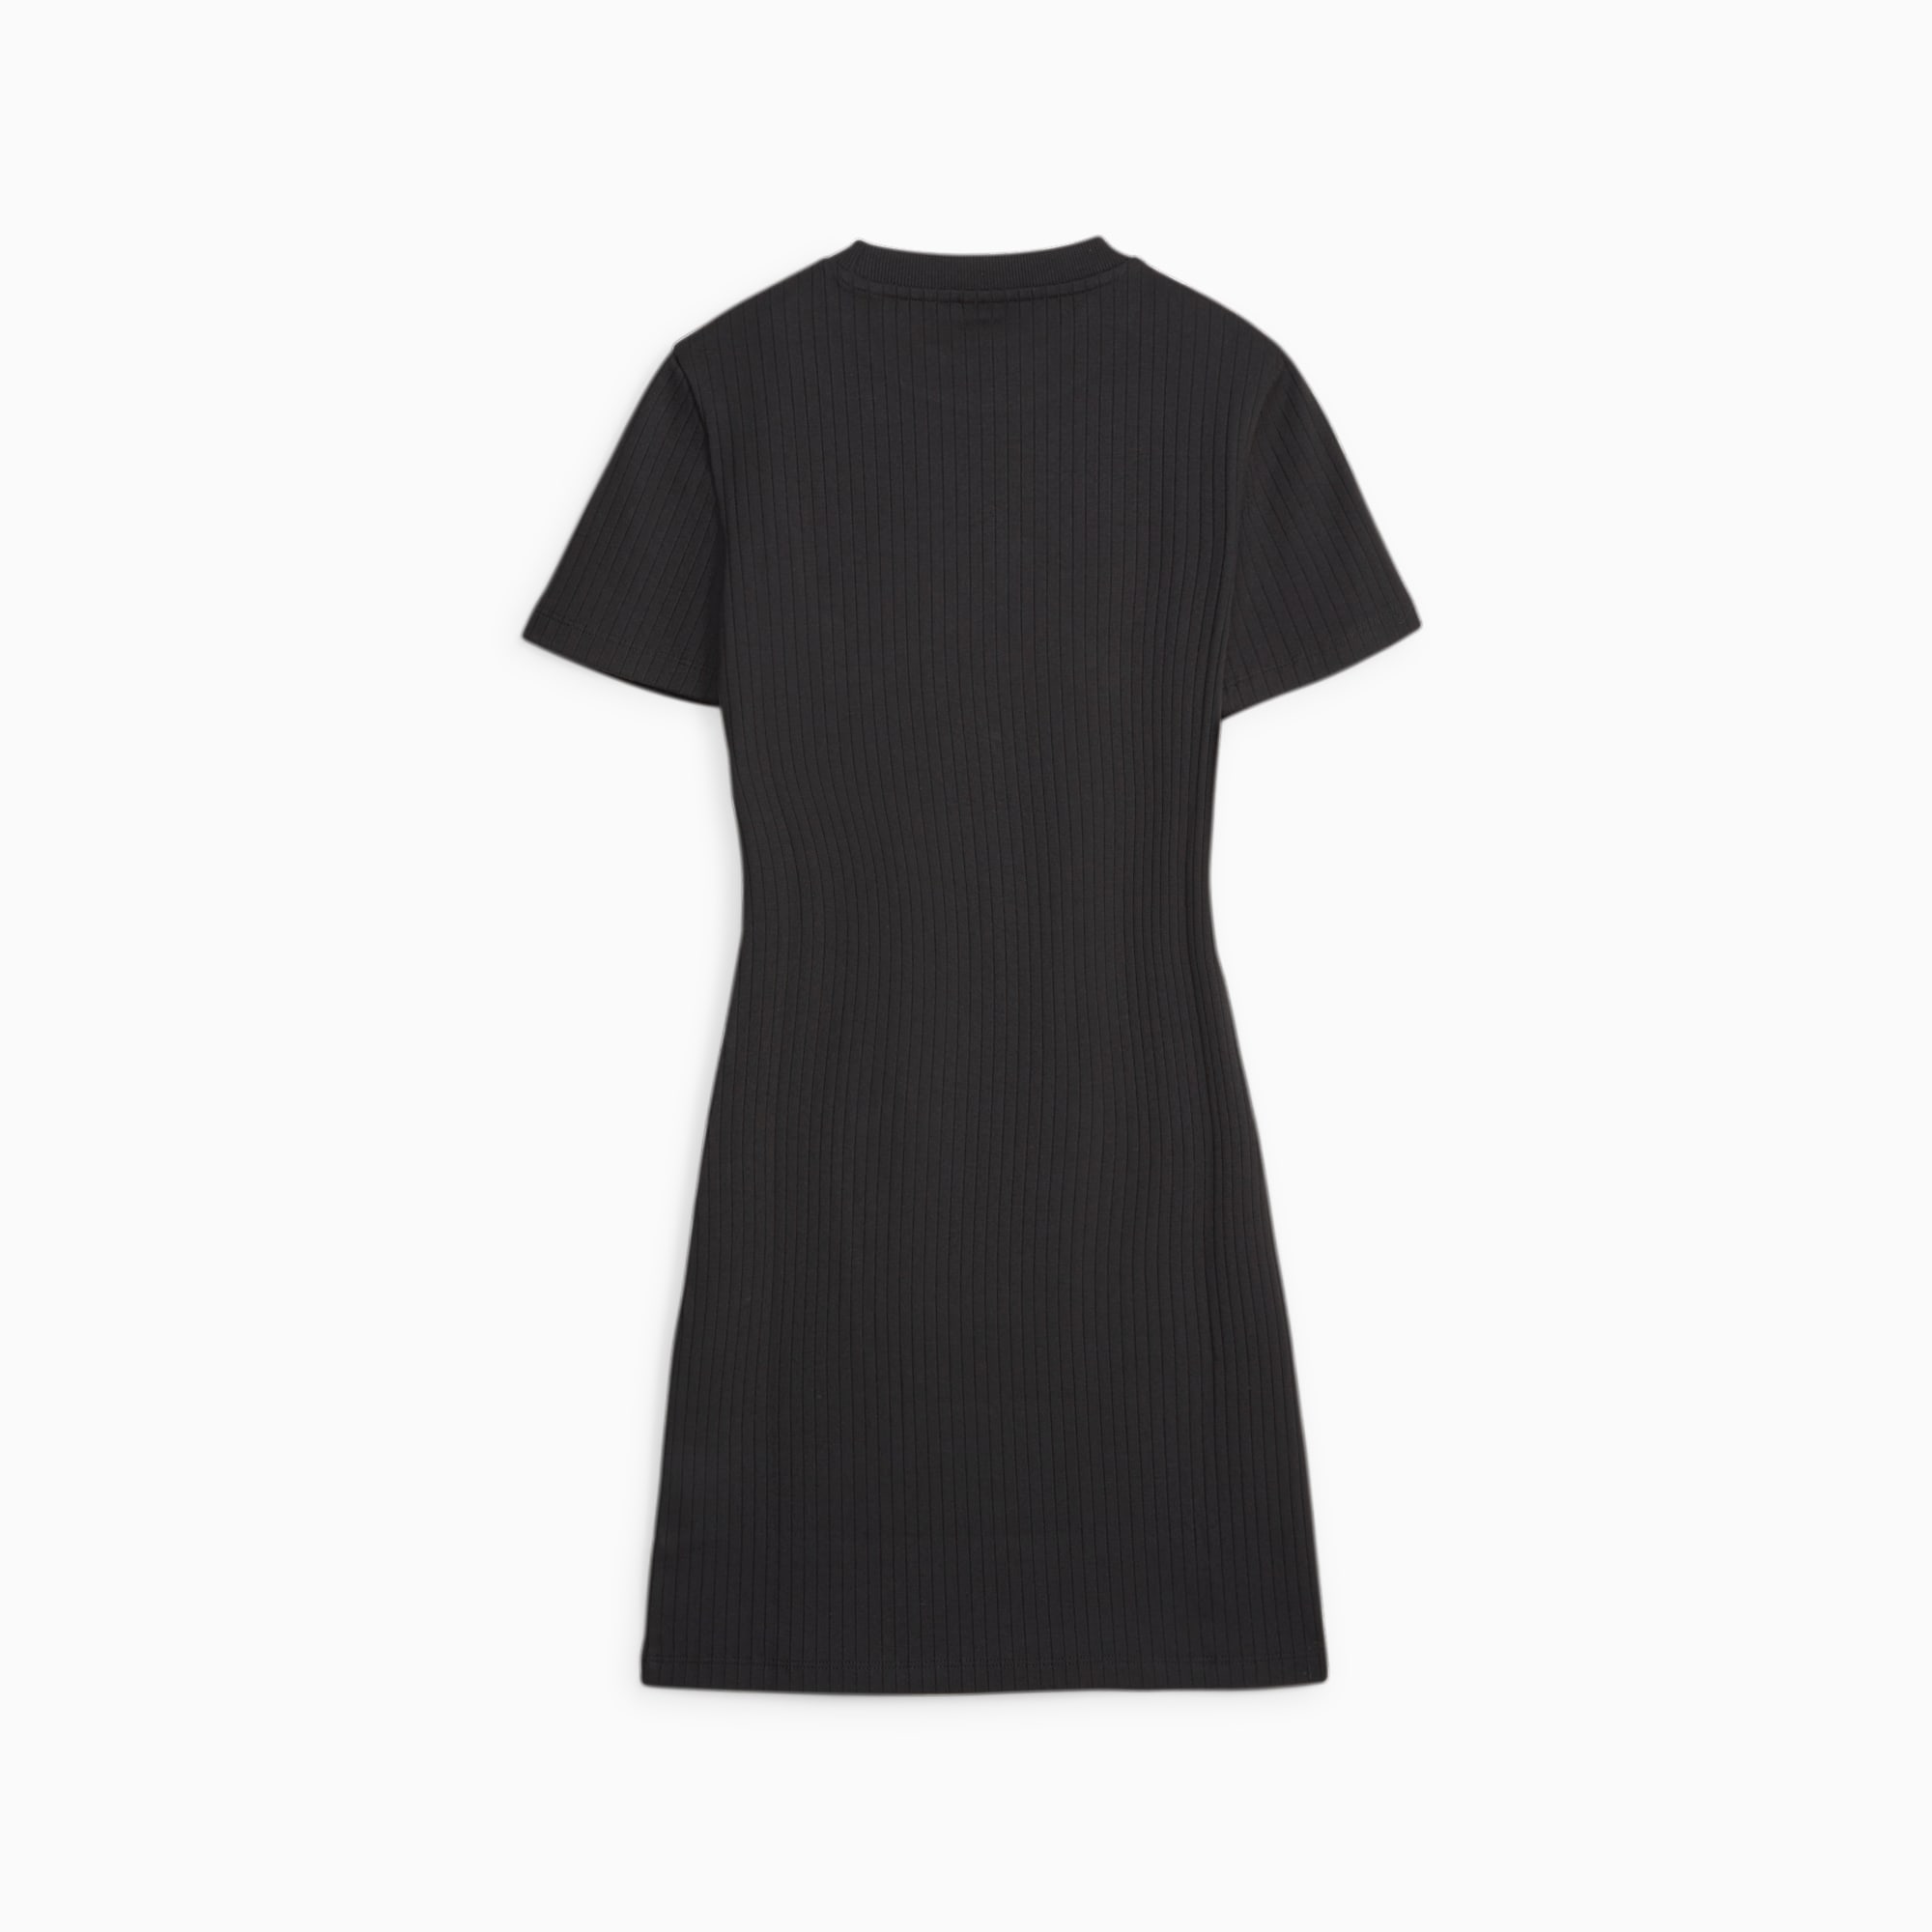 PUMA Classics Women's Ribbed Dress, Black, Size XS, Clothing